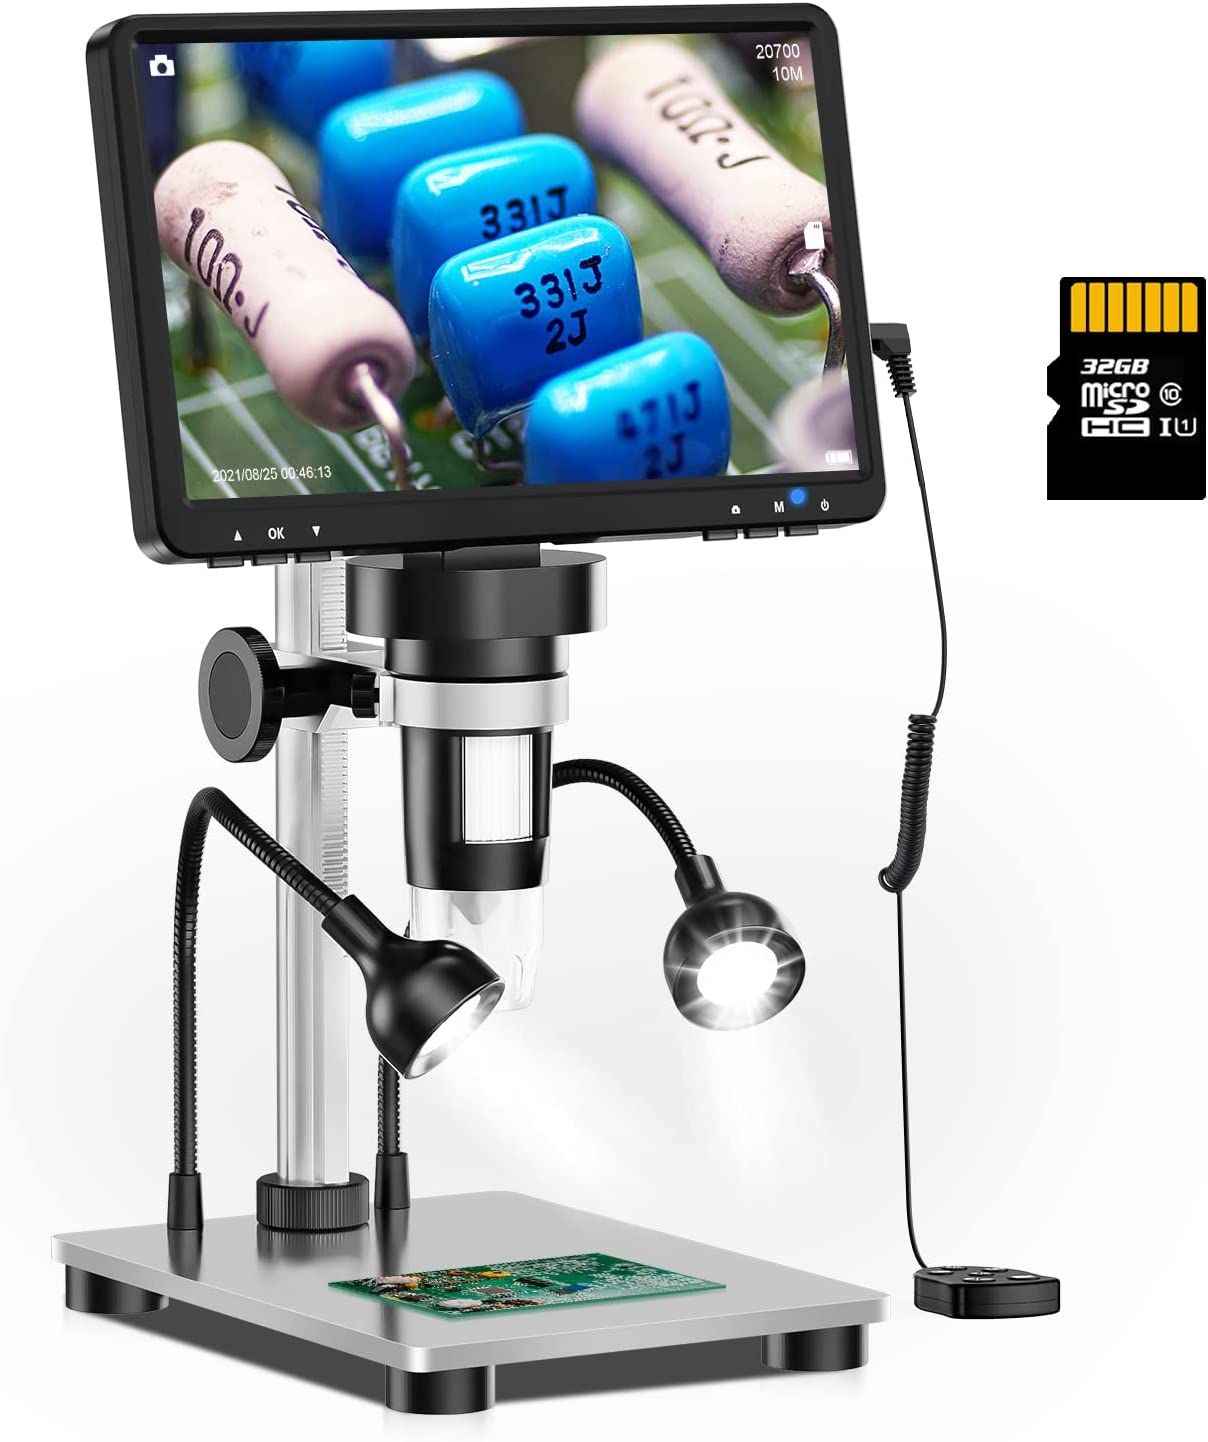 Elikliv 7'' LCD Digital Microscope + 32GB Card, 1080P USB Coin ...